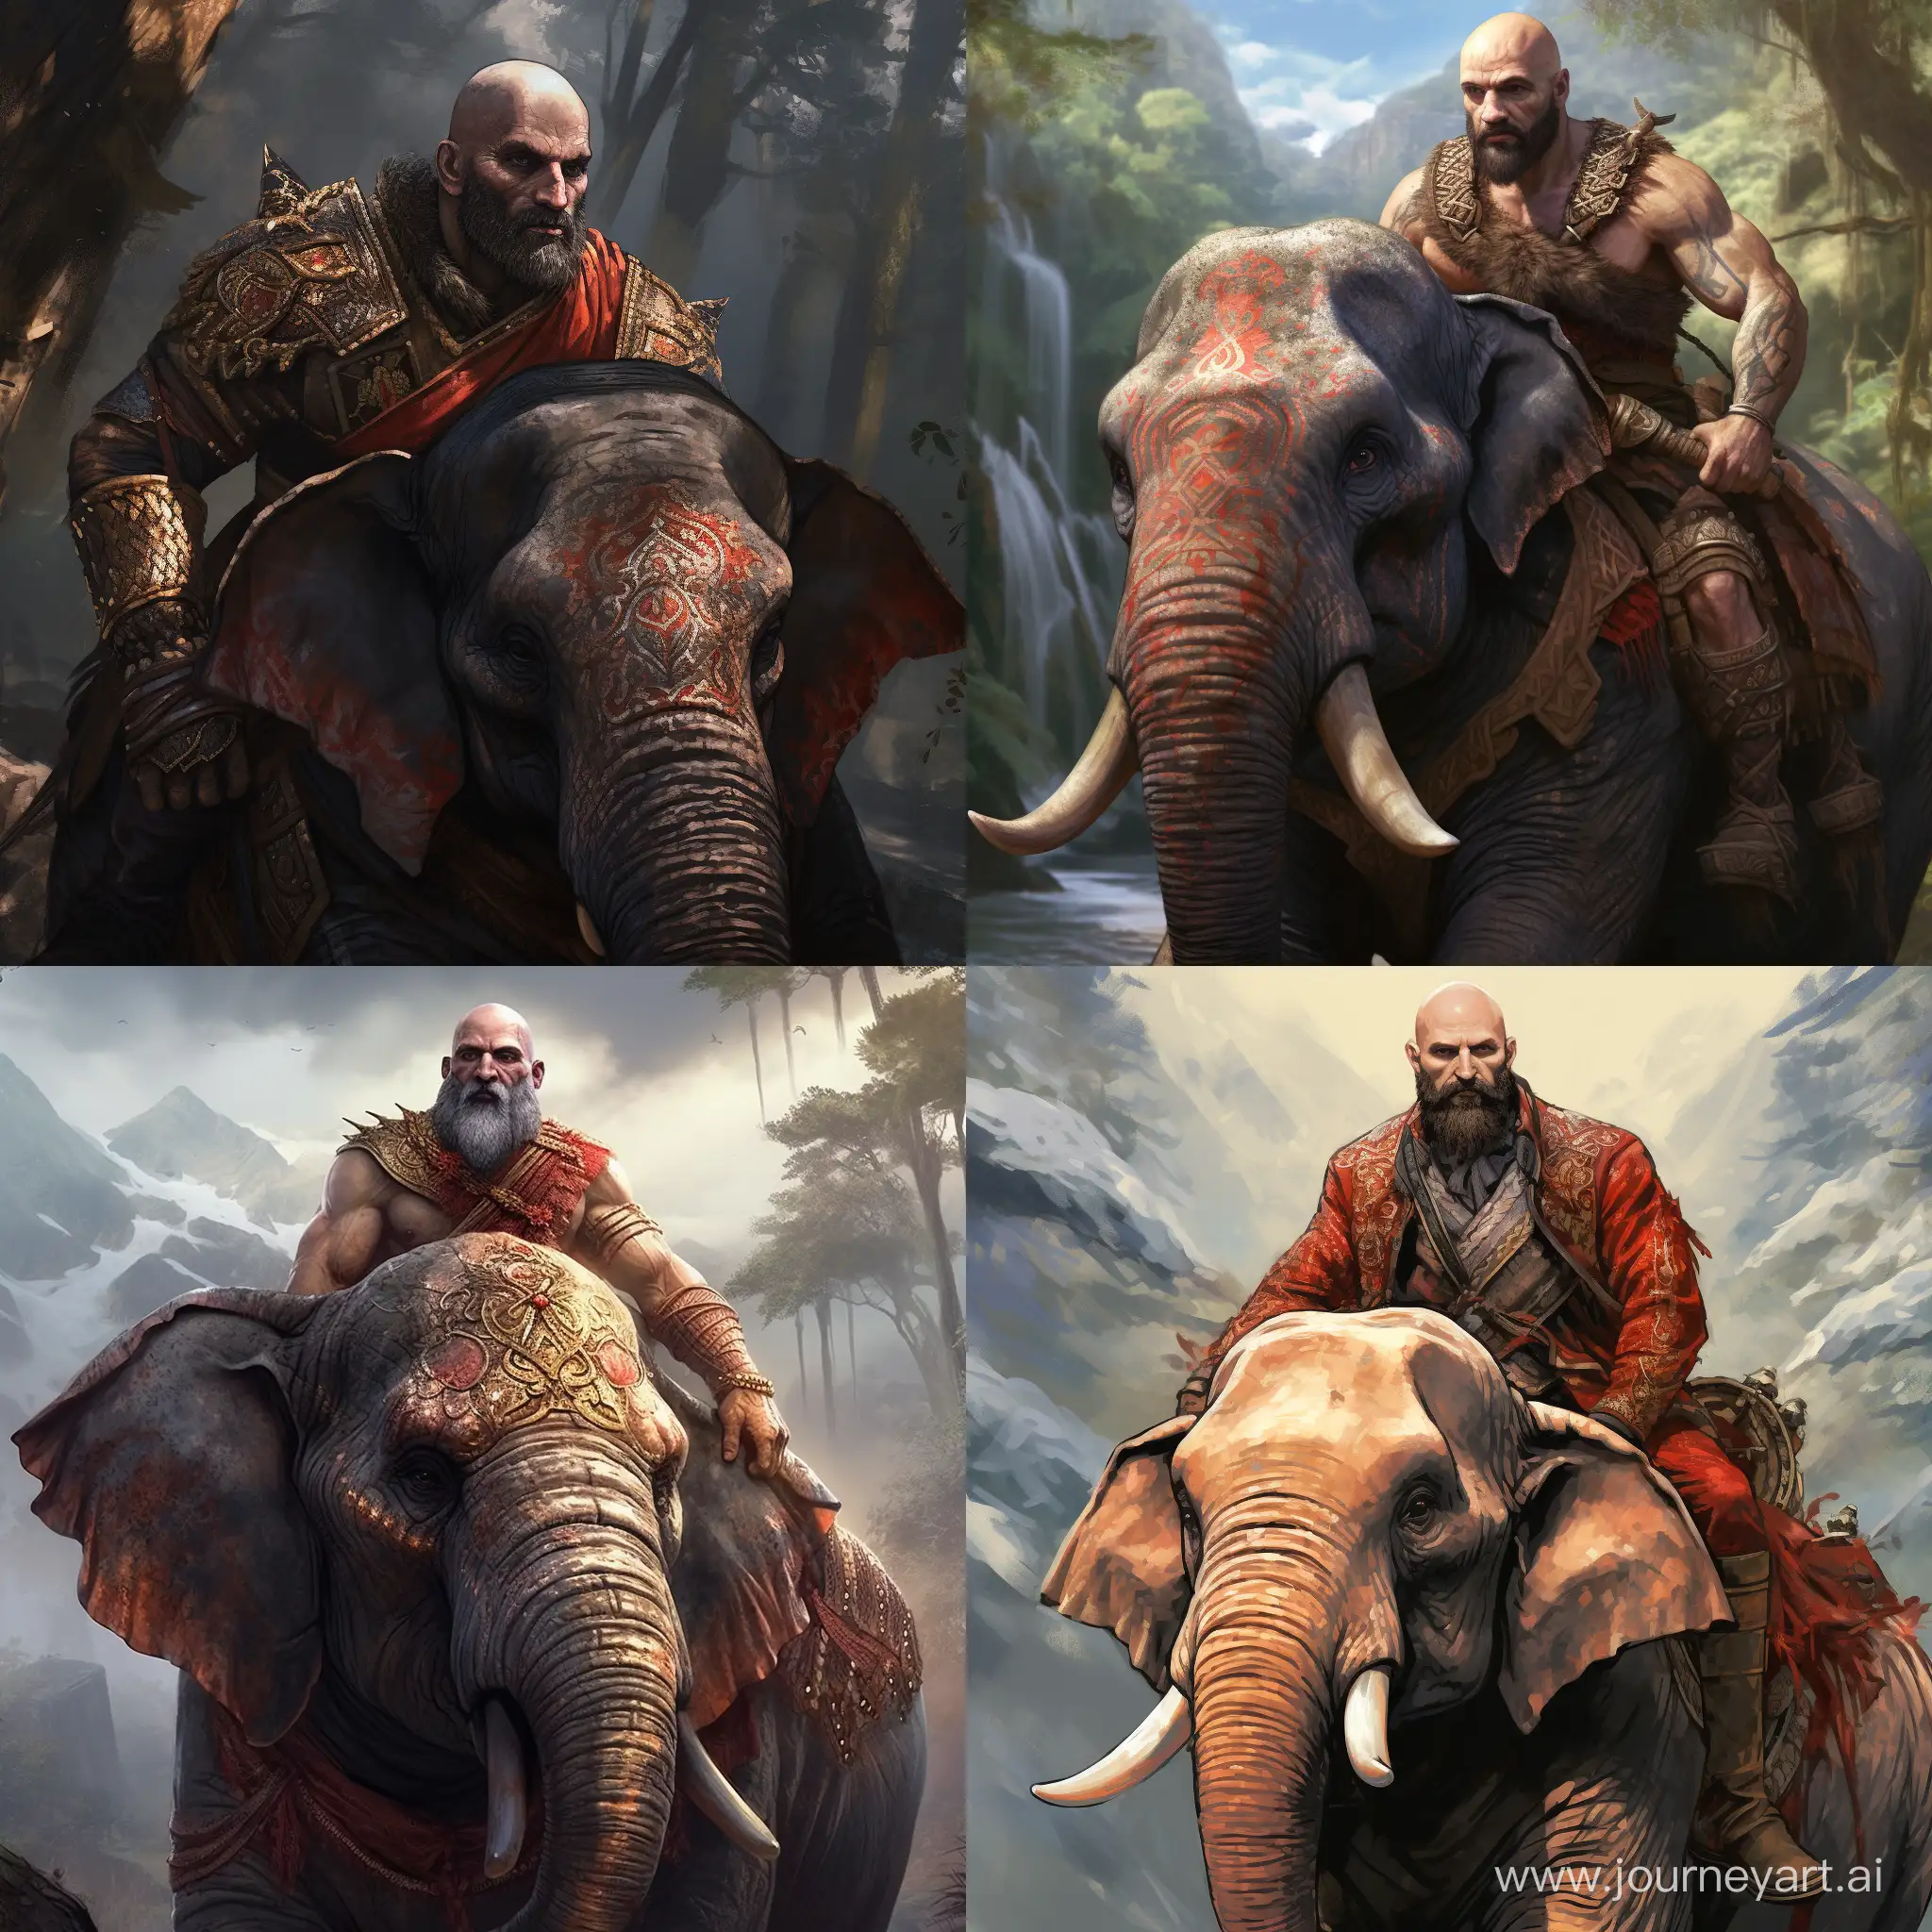 Majestic-Kratos-Riding-Elephant-in-Spectacular-Artwork